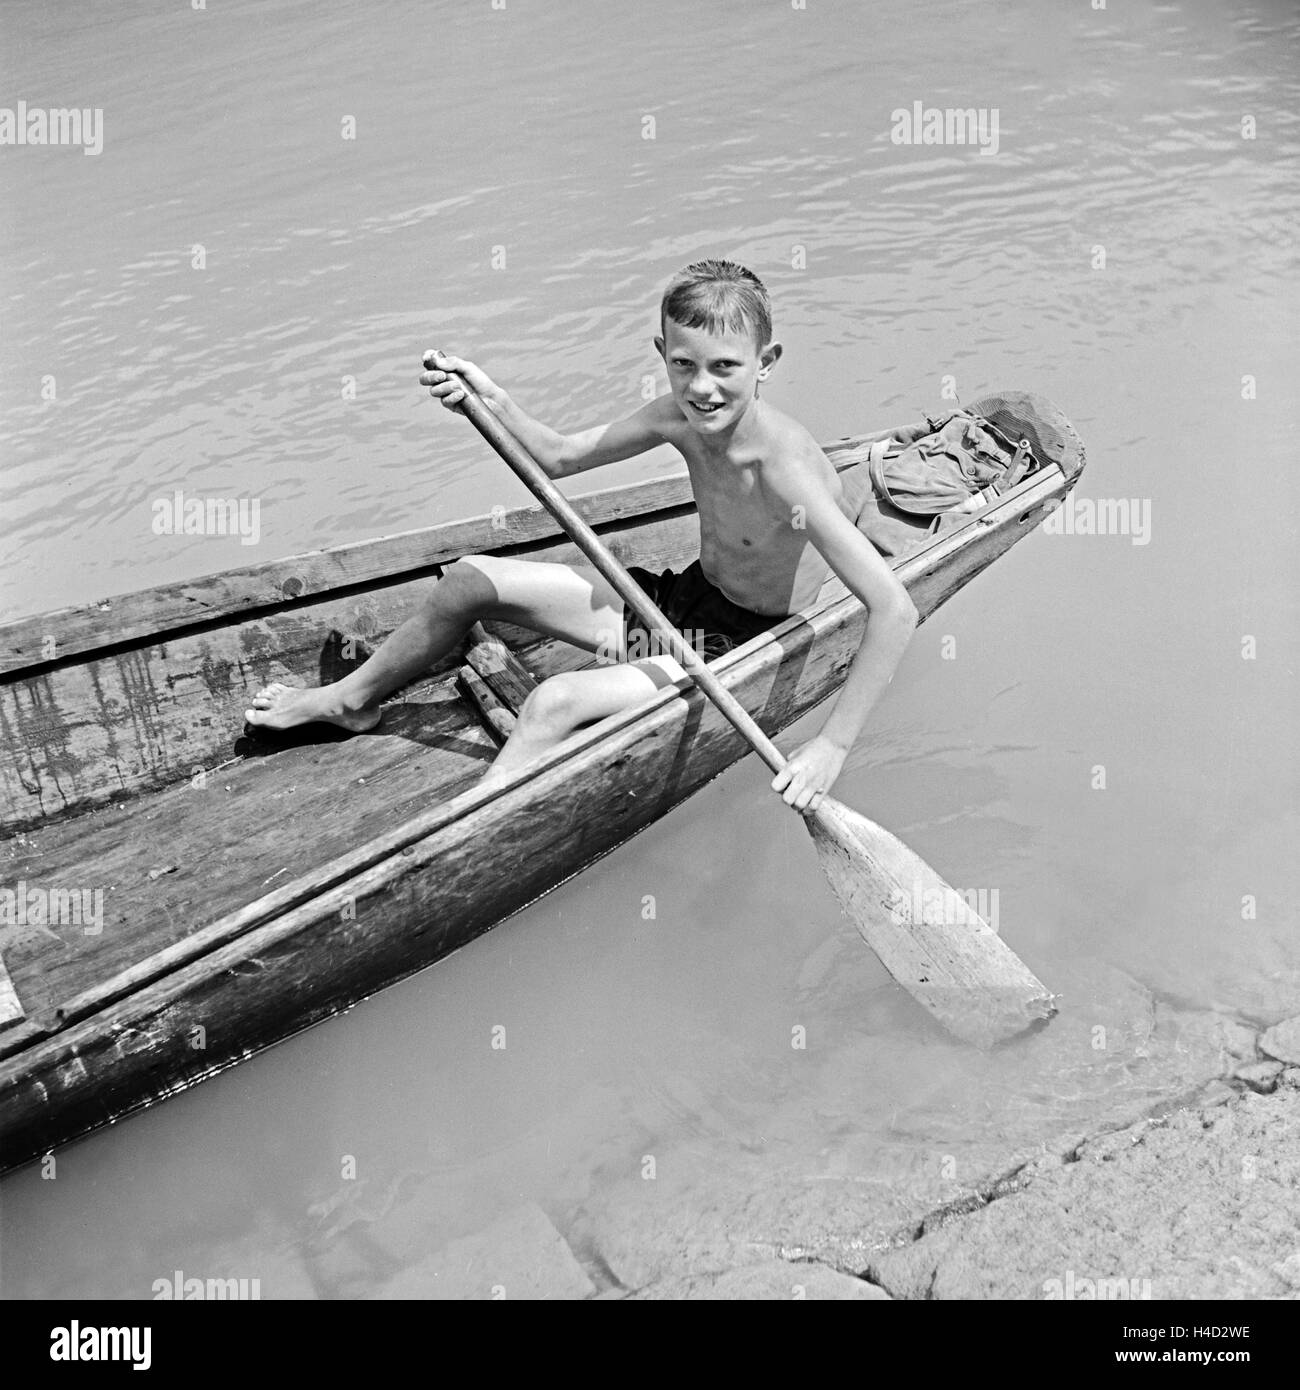 Ein kleiner Junge in seinem l Ruderboot auf der Donau bei Passau, Deutschland 1930 er Jahre. Un petit garçon dans son bateau à rames traditinal sur Danube près de Passau, Allemagne 1930. Banque D'Images